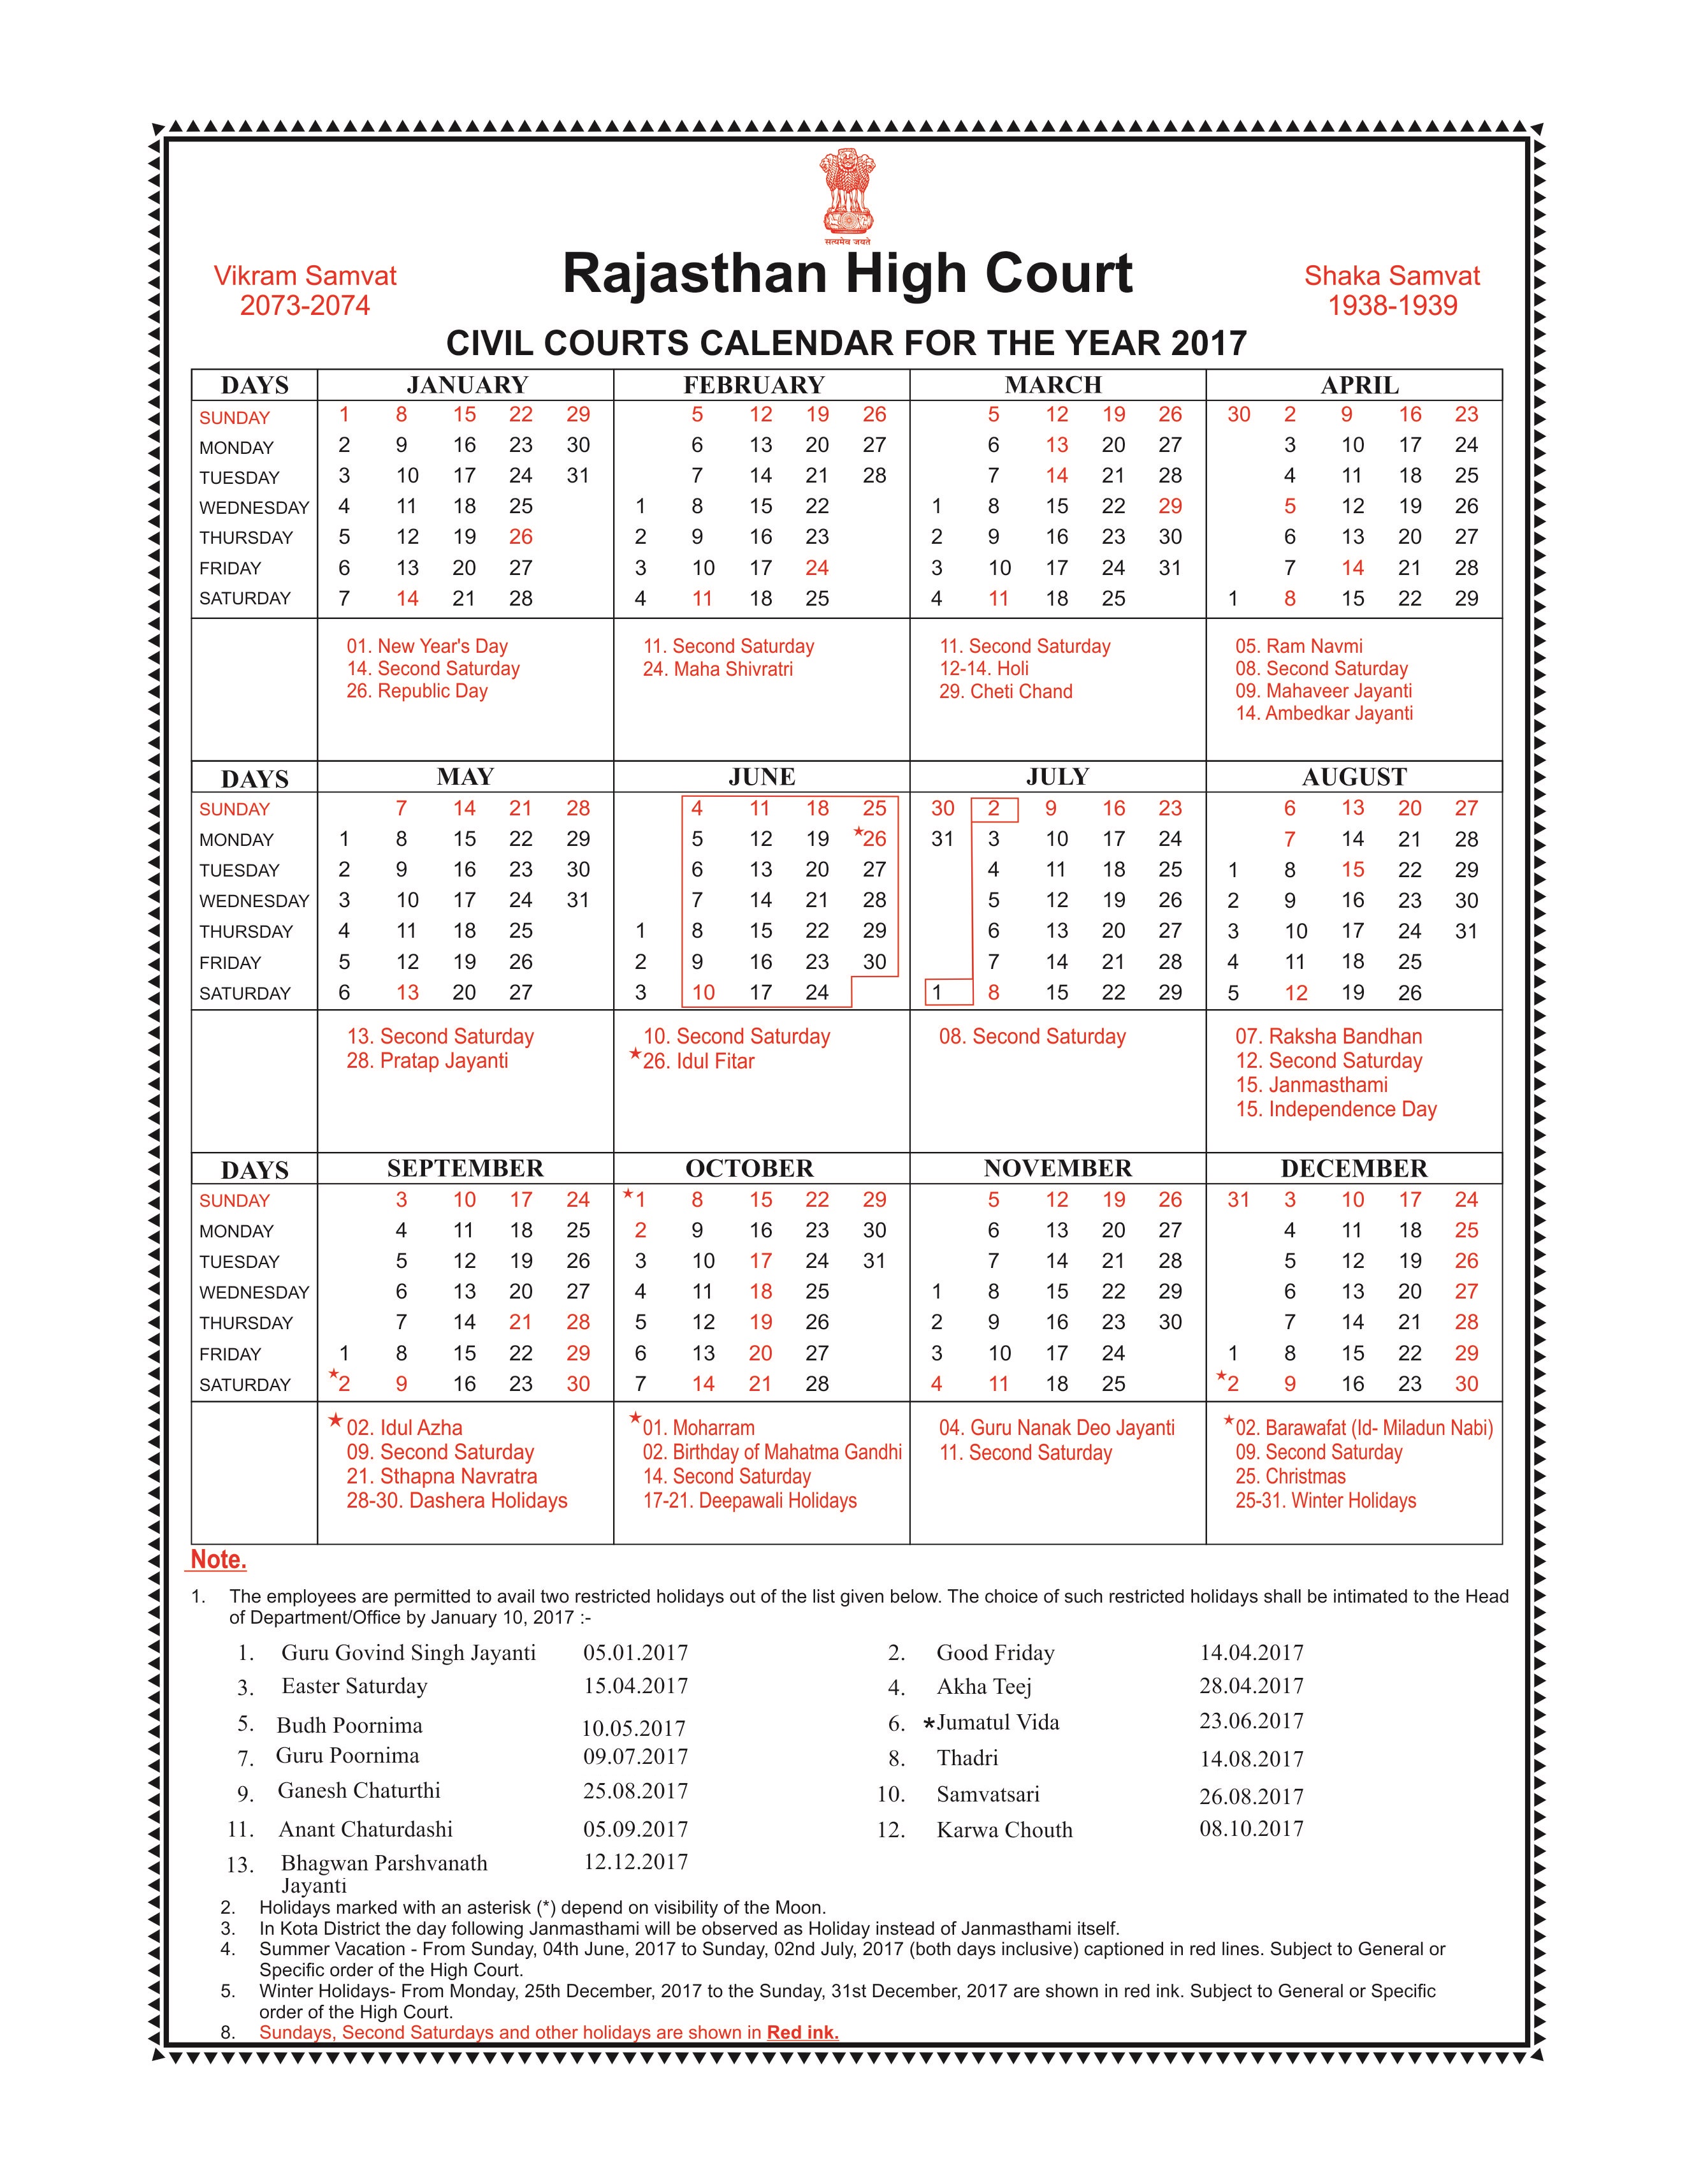 Rajasthan High Court (Civil Courts) Calendar 2017